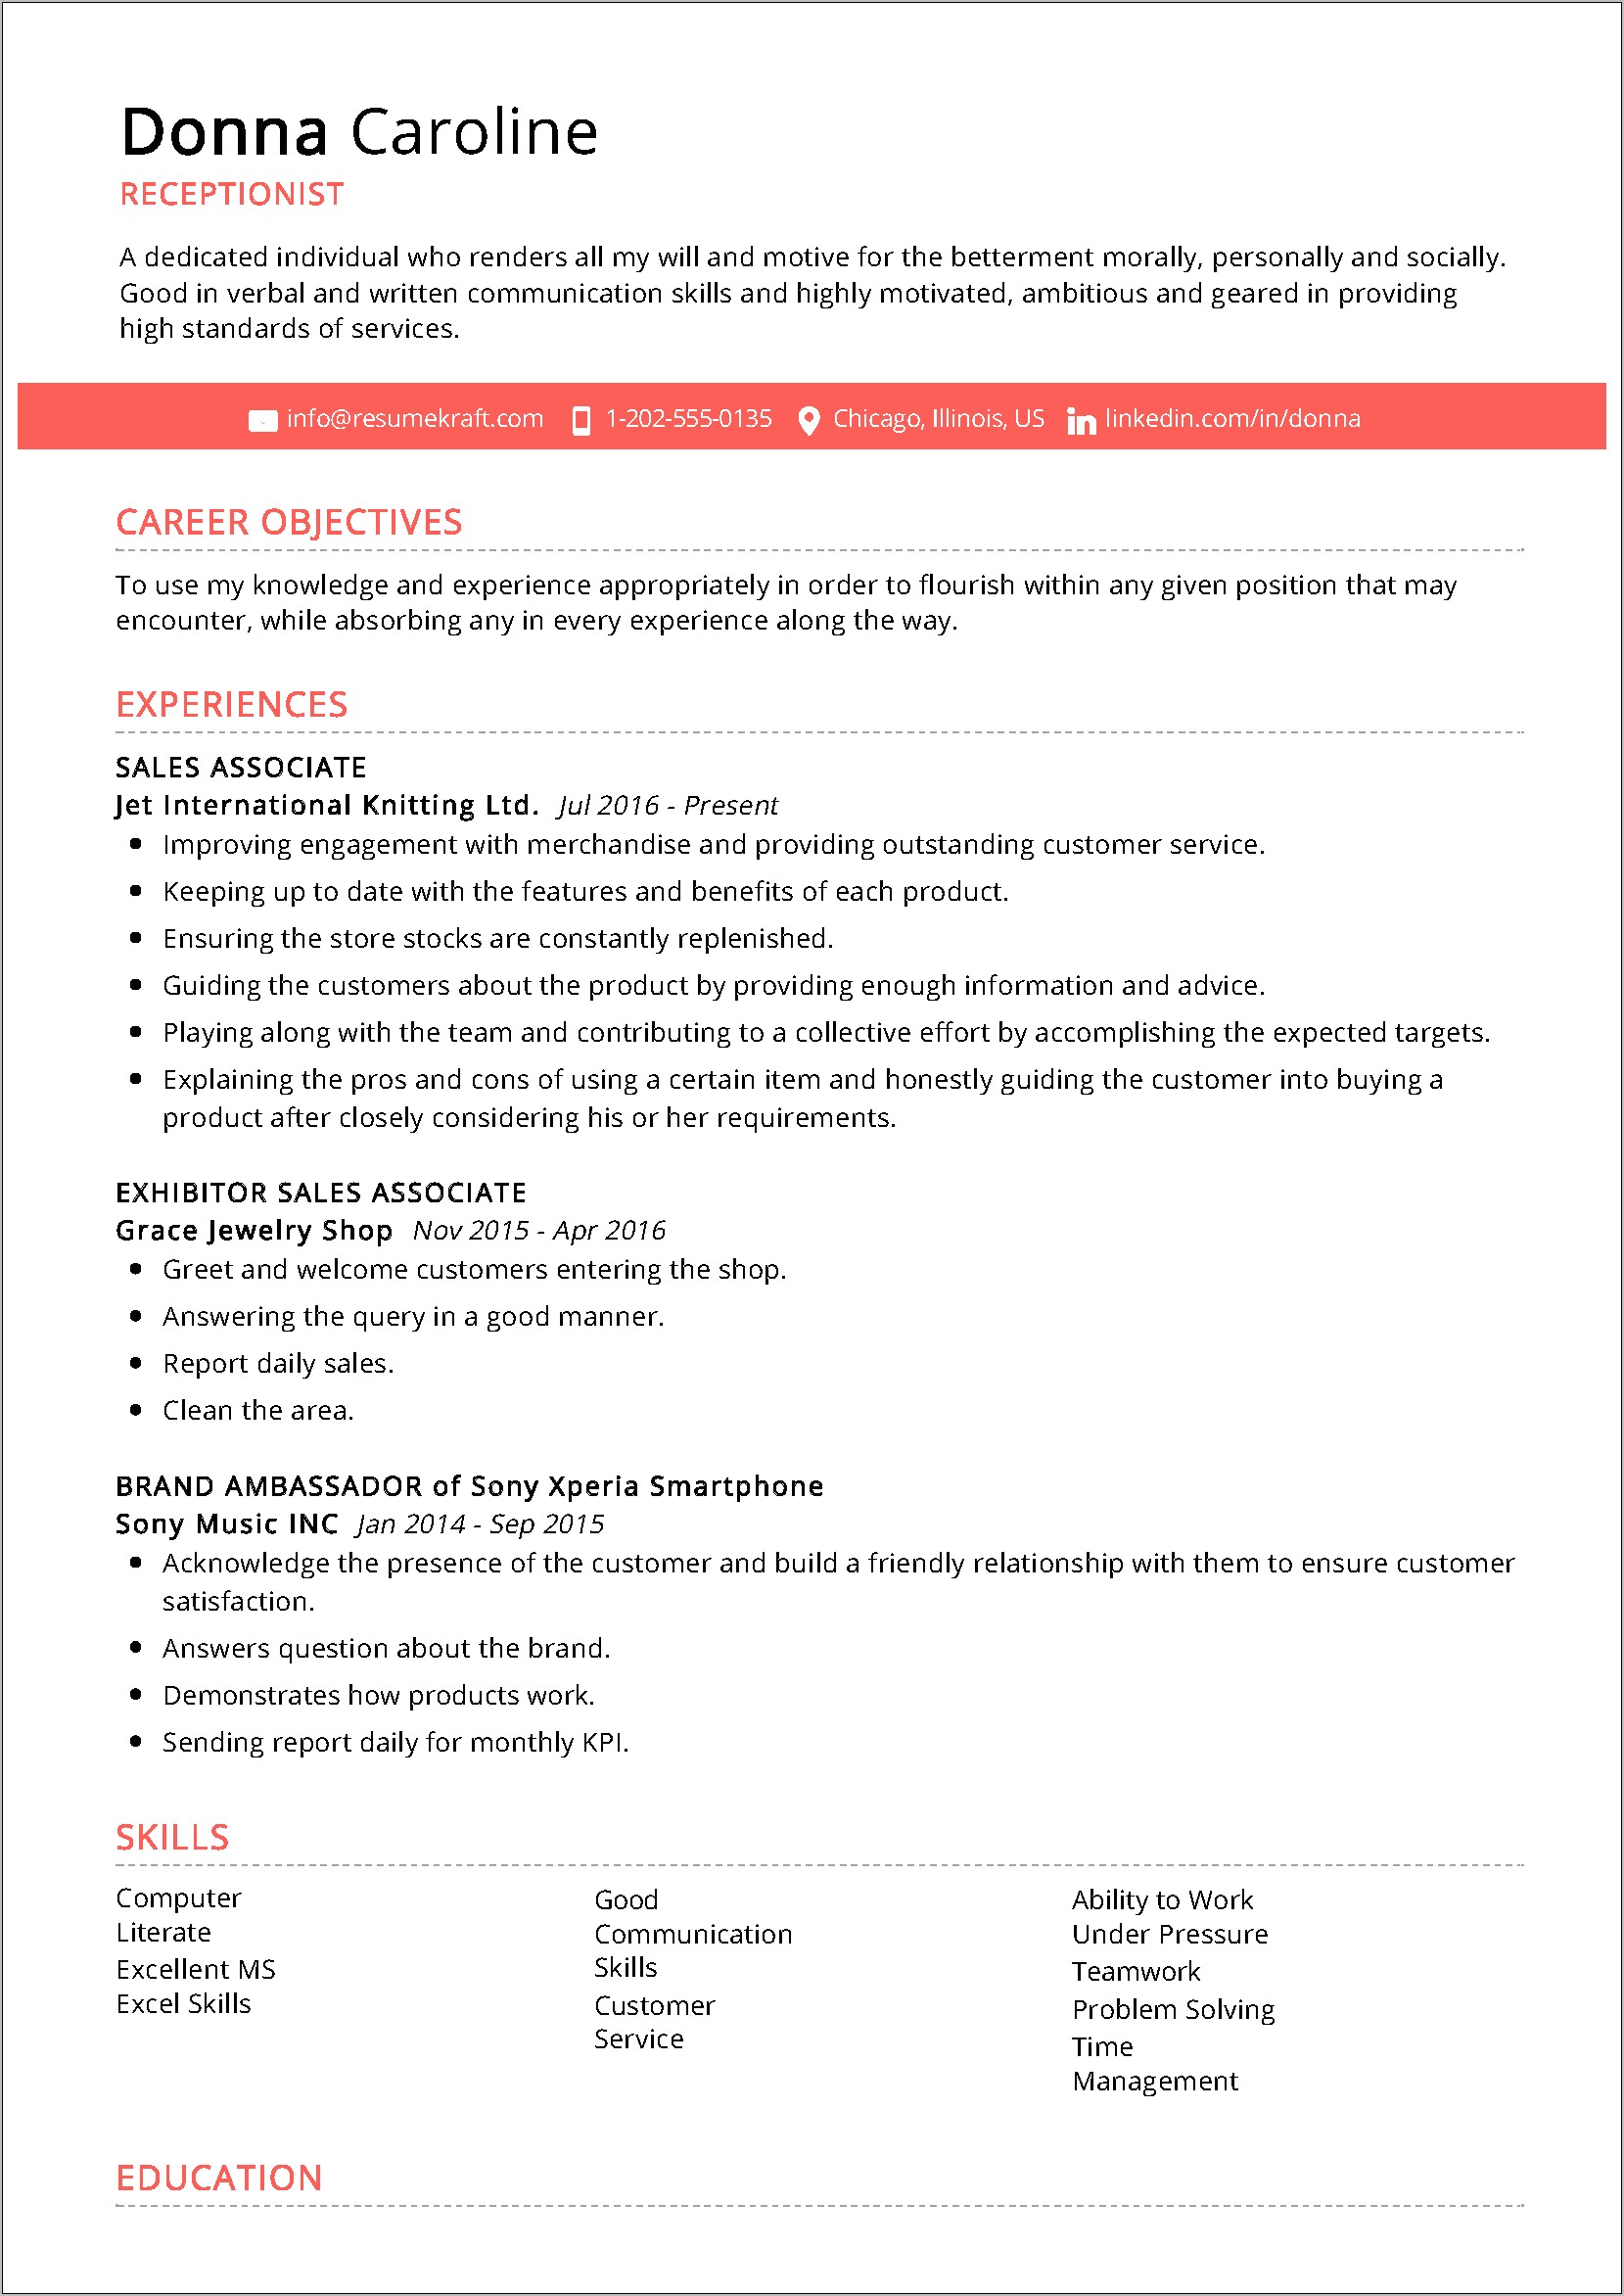 Job Description For Resume Receptionist